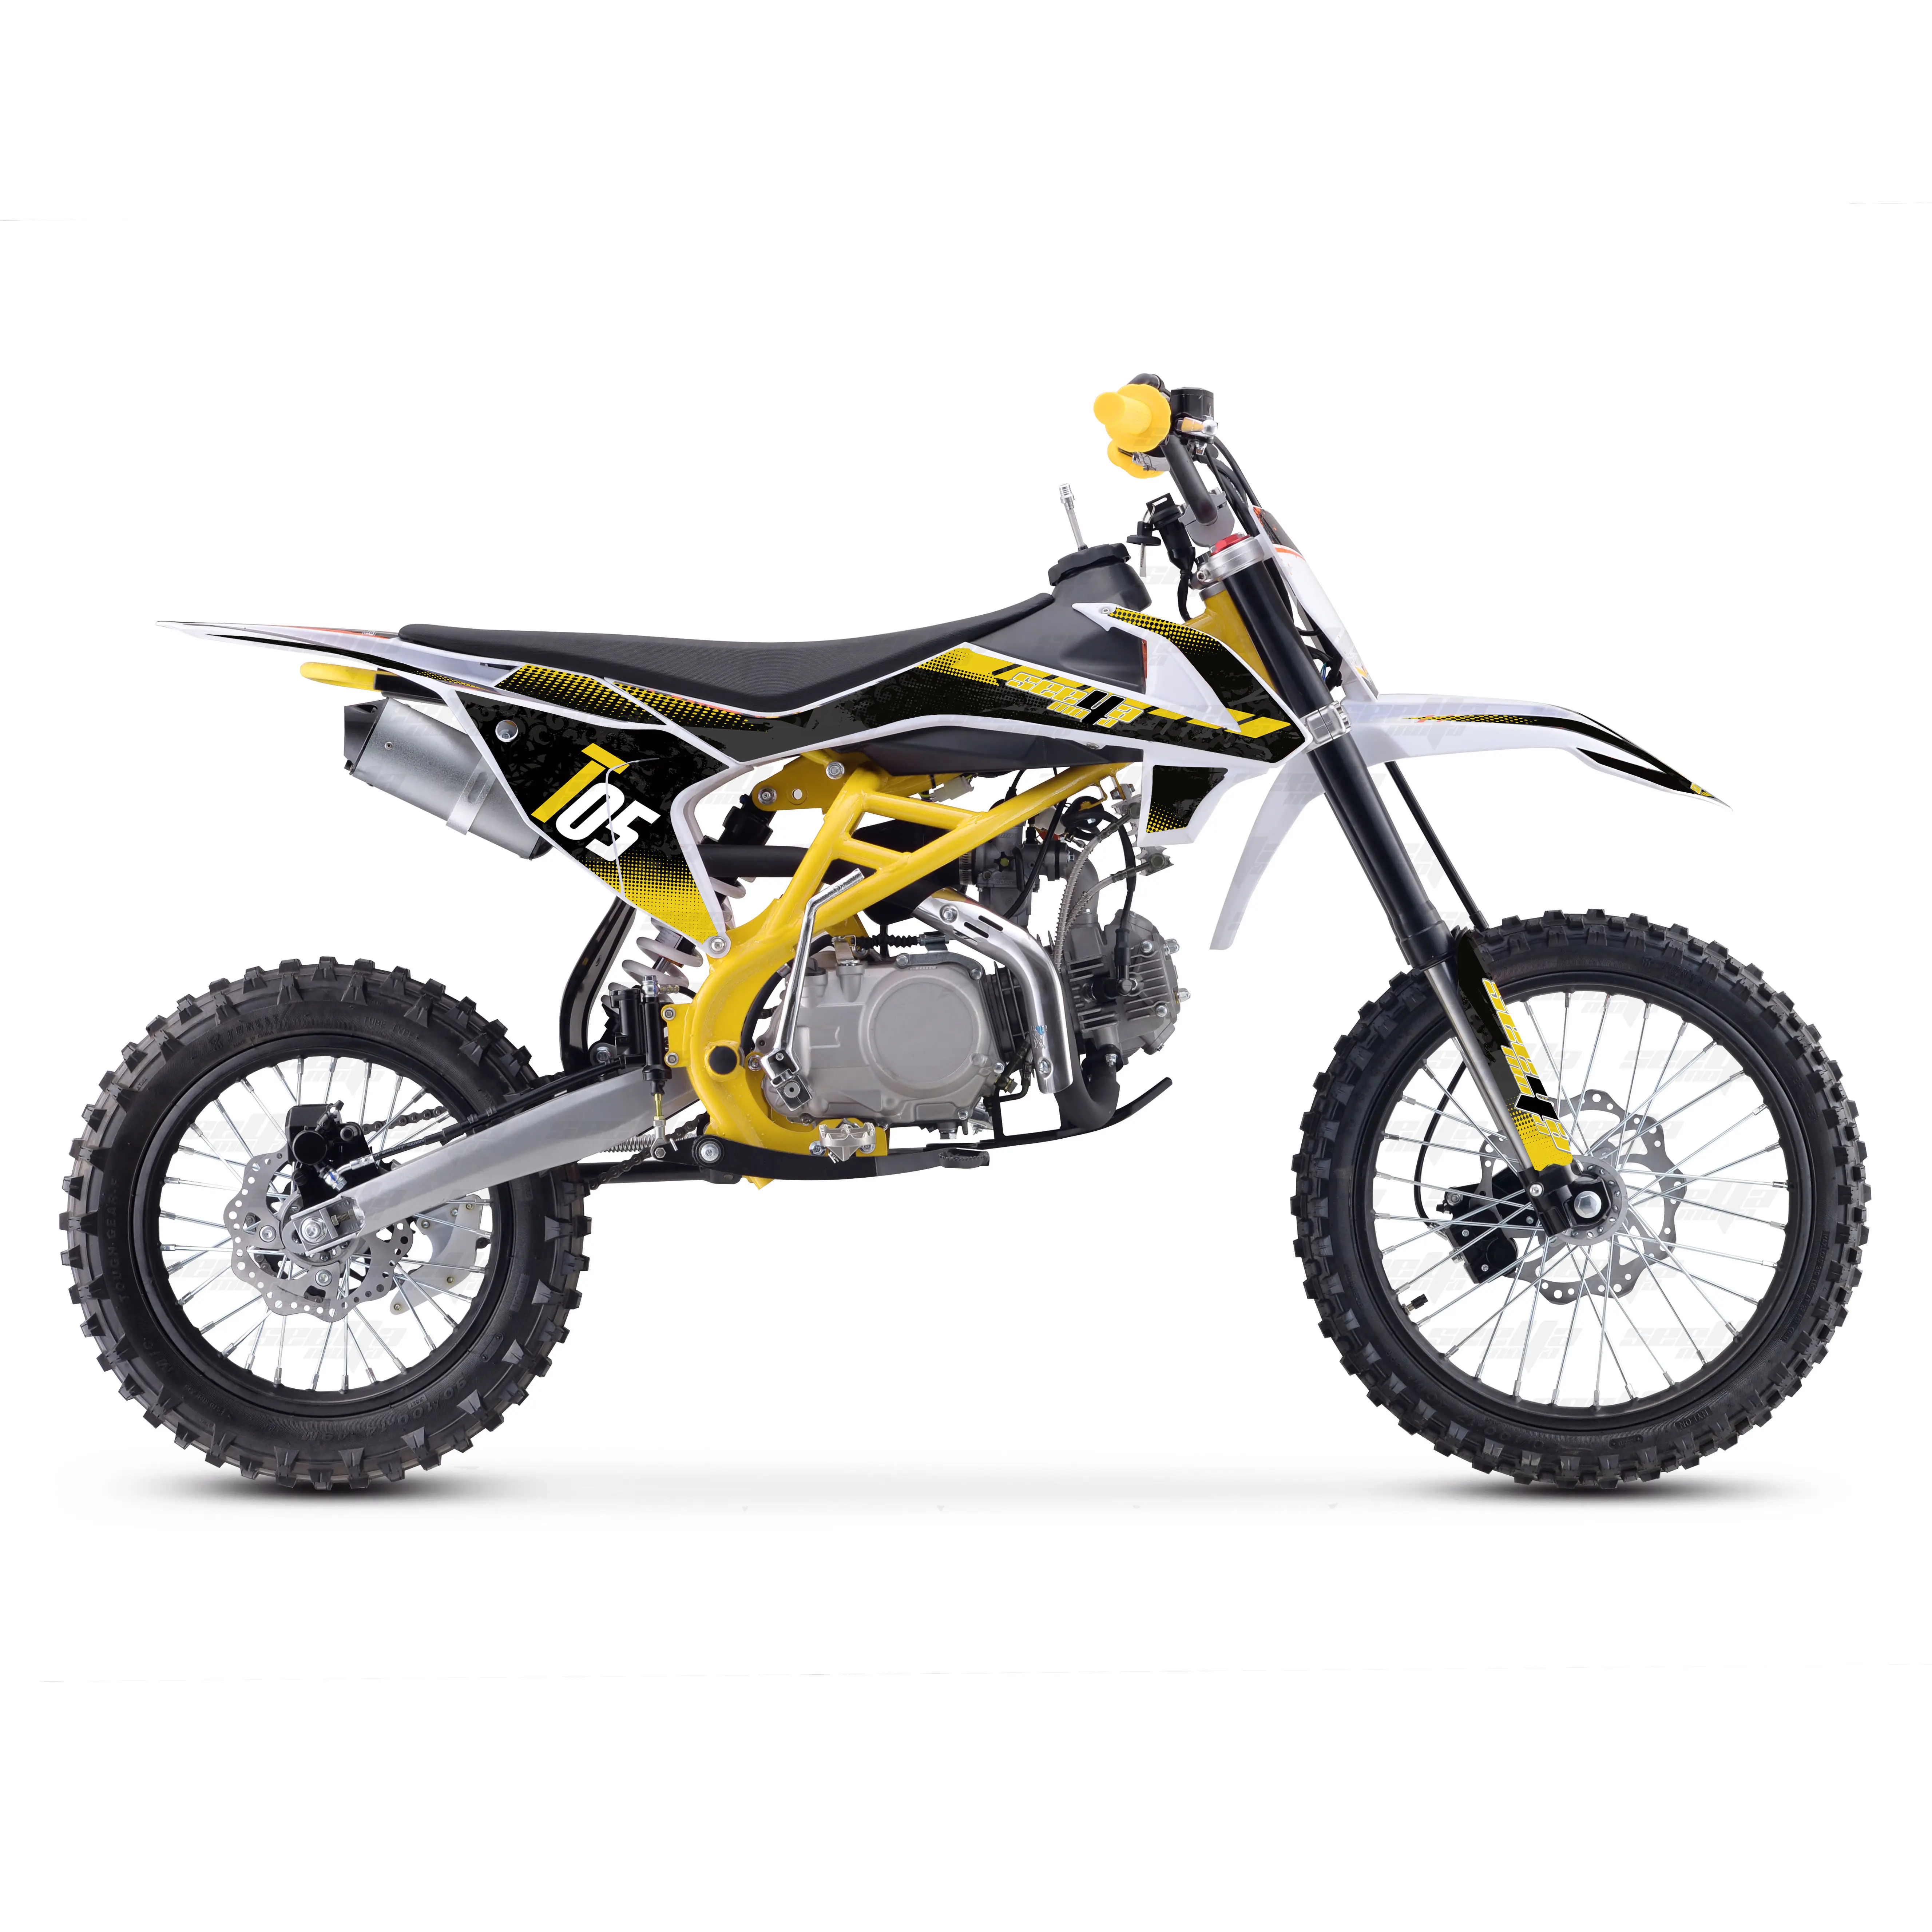 Новый комплект из желтых SEEYA 140cc мотоциклы seeyamoto масляным охлаждением pit bike MOTO крест Байк крест мотоцикл T05 140 в Китае (стандарты CE,